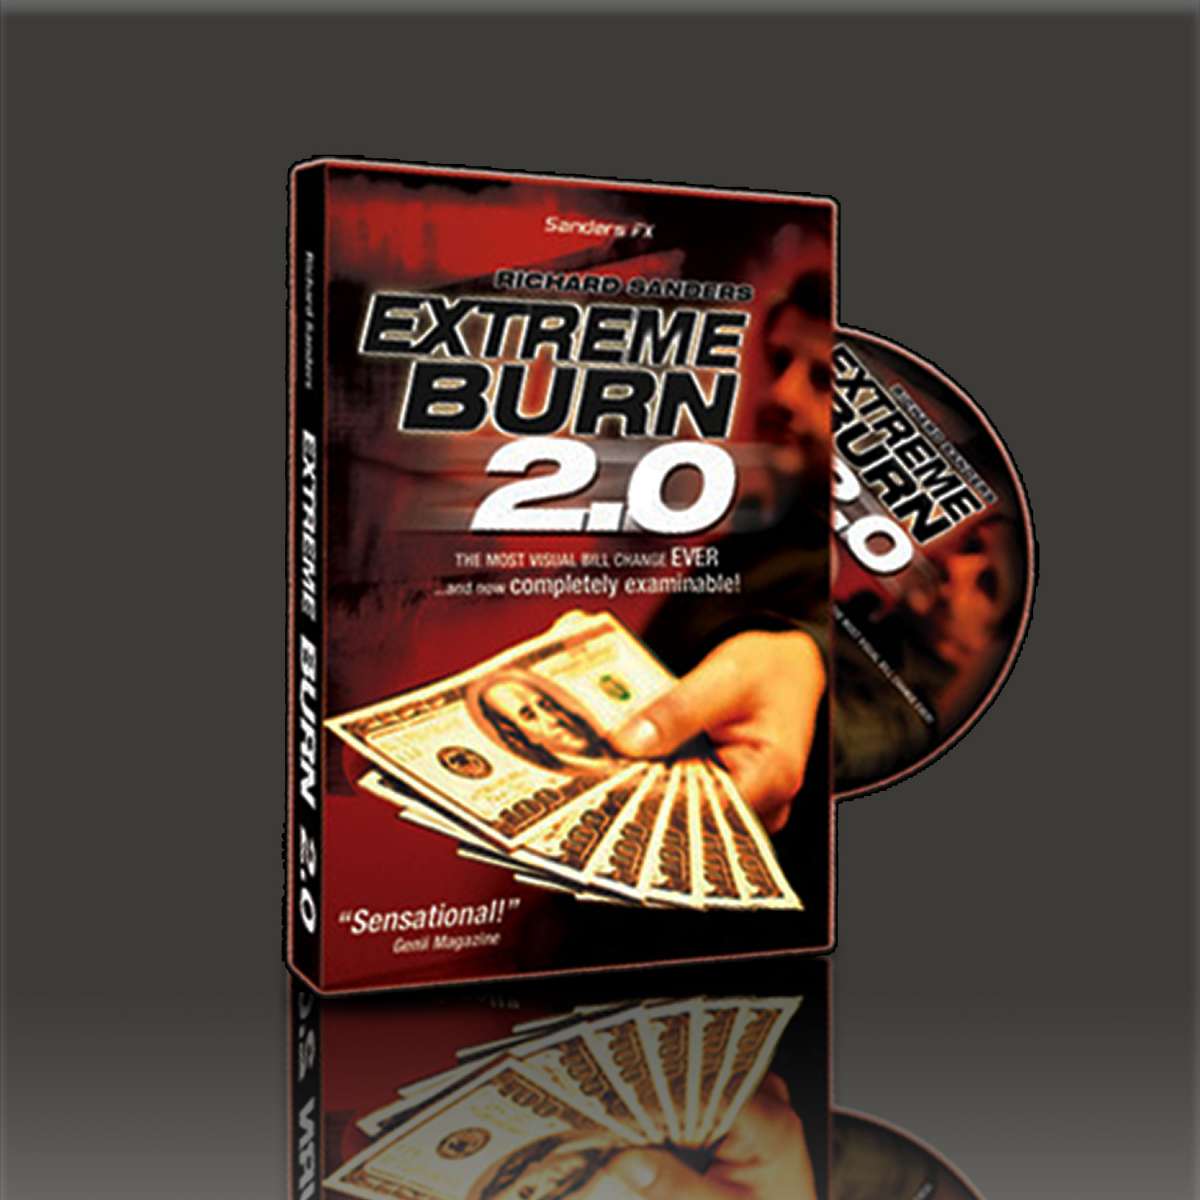 extreme burn 2.0 by richard sanders rapidshare